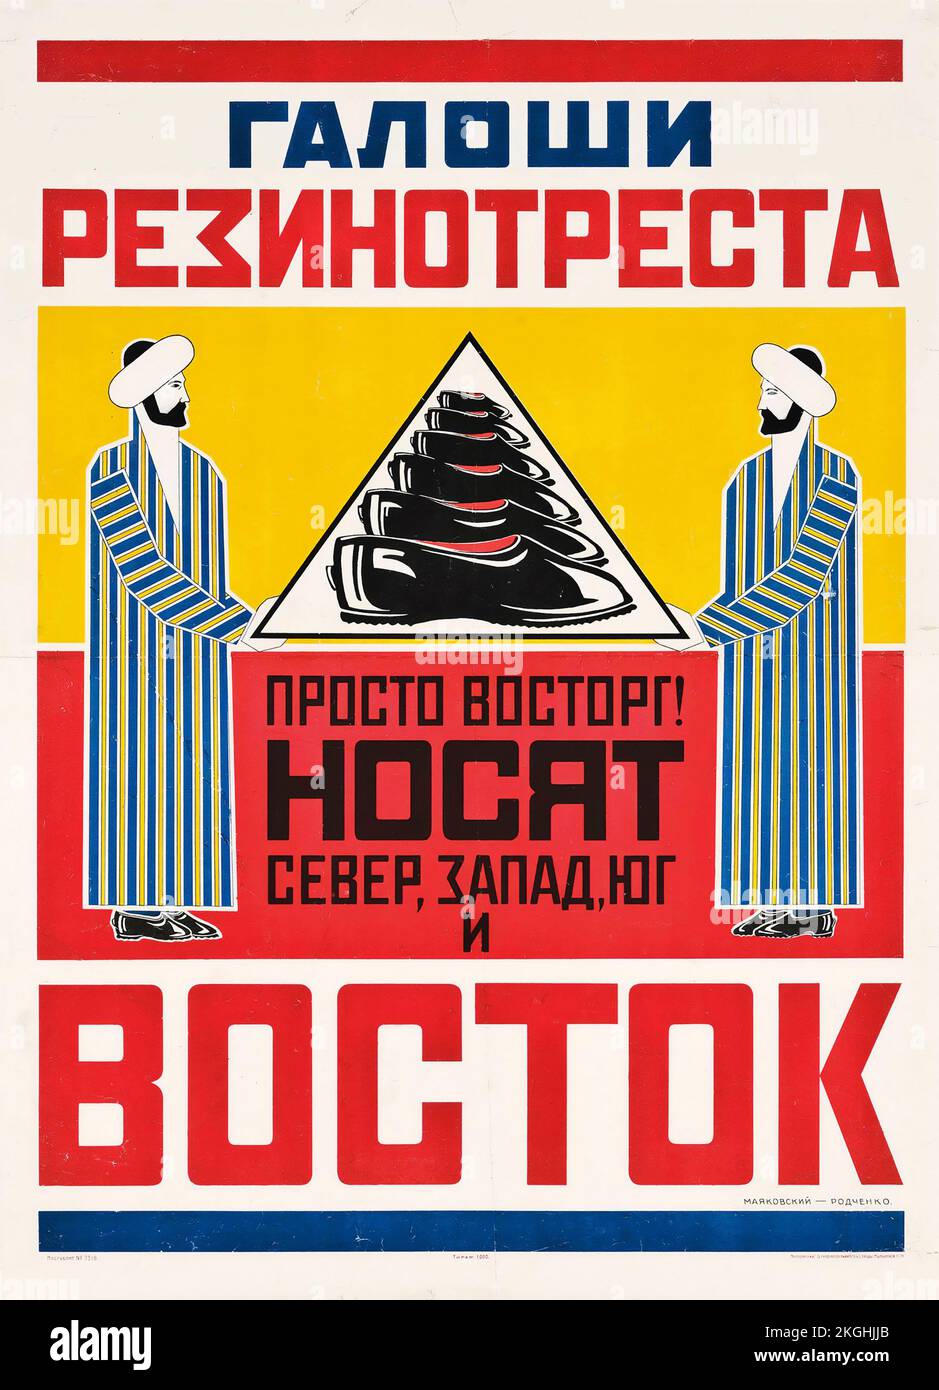 Vintage russian poster - Alexander Rodchenko (1891-1956) & Vladimir Mayakovsky (1893-1930) REZINOTREST GALOSHES - galosh advertisement 1923 Stock Photo